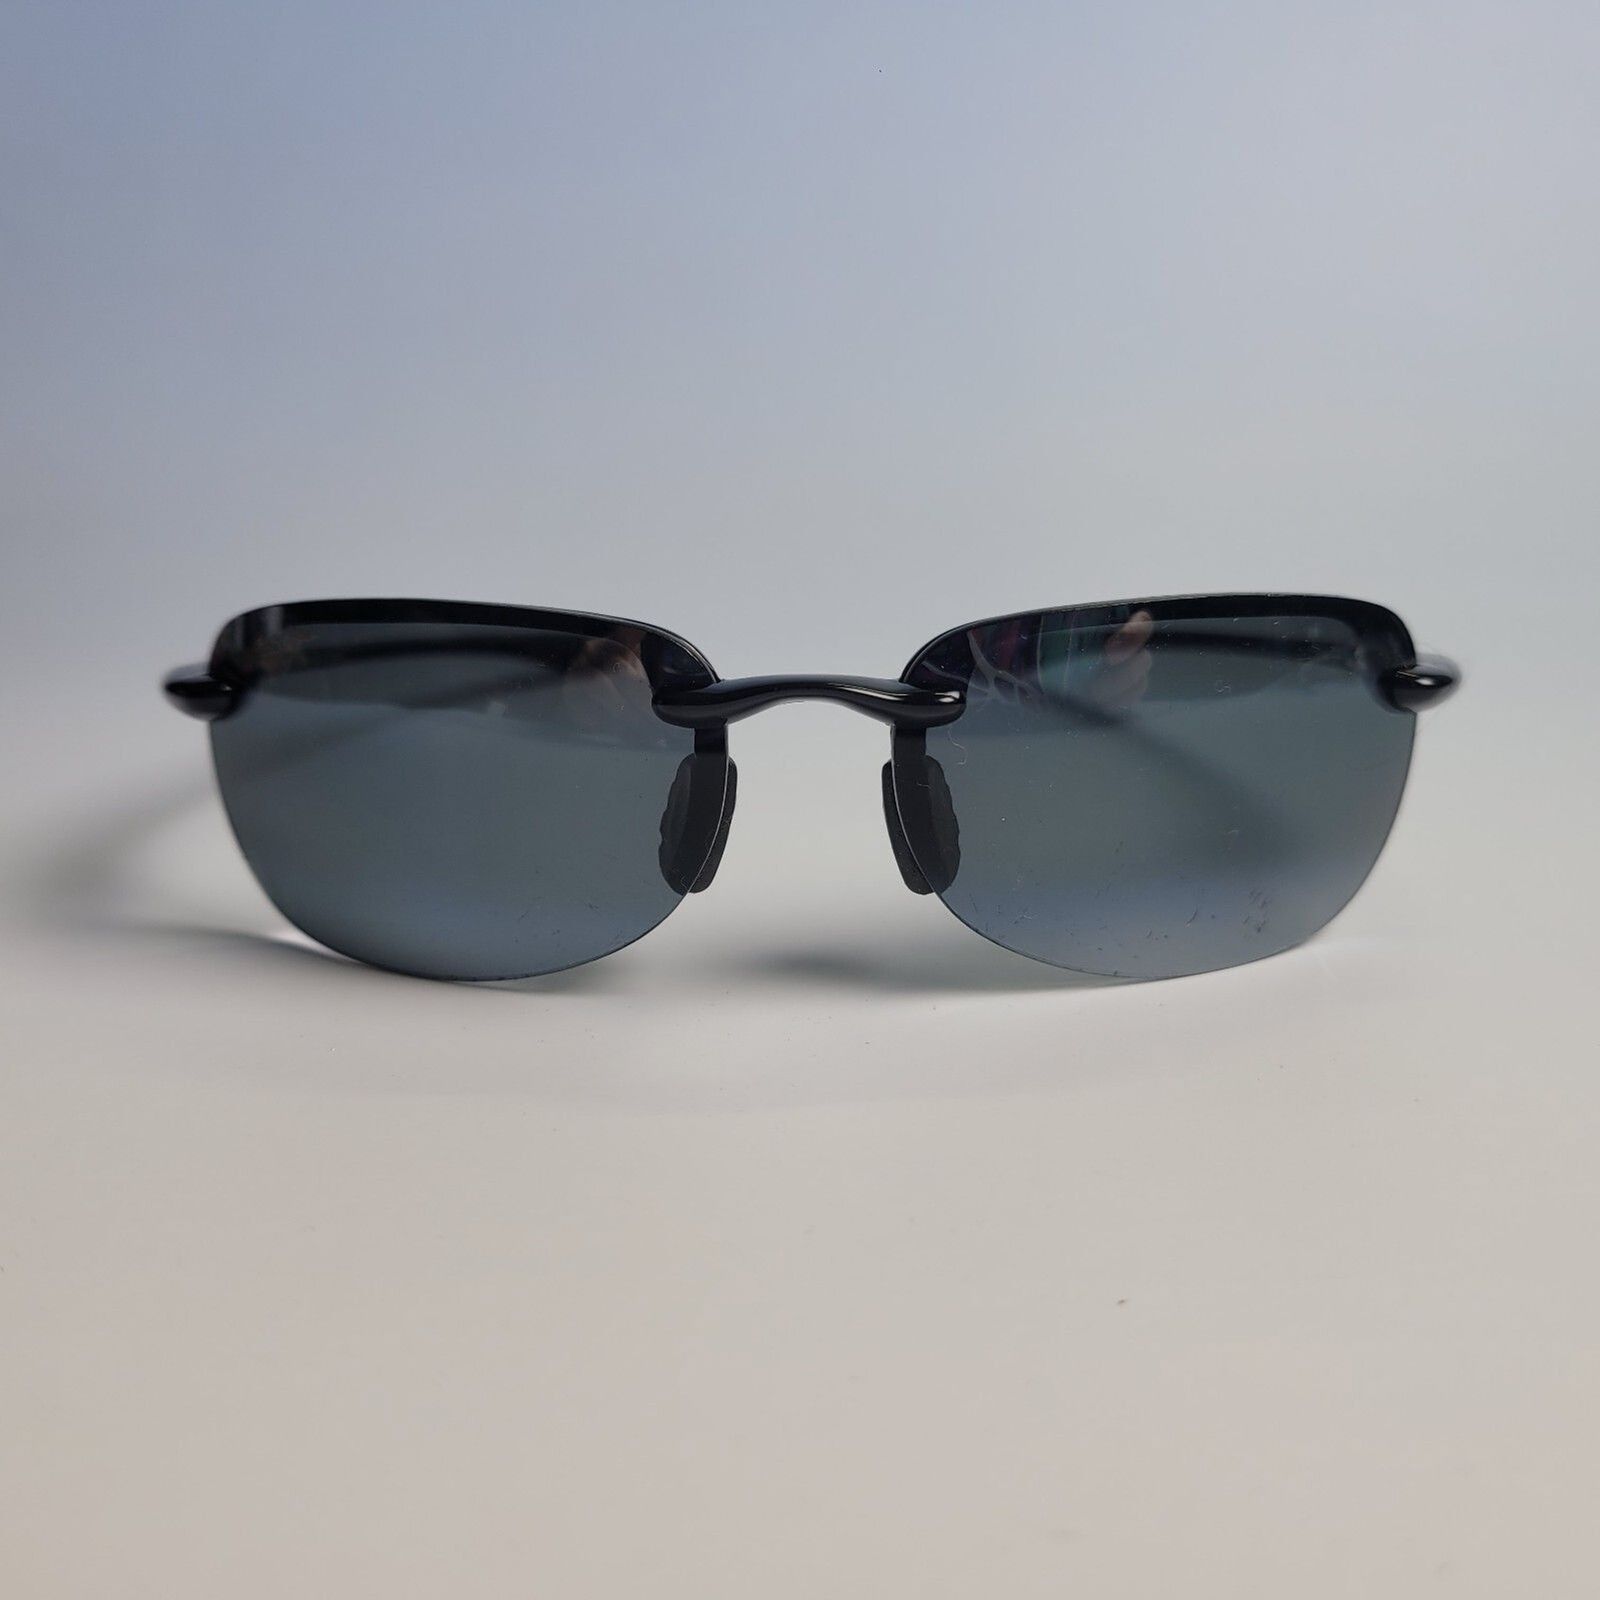 Jim Maui Sandy Beach 408-02 56-14 130 made in Japan vintage sunglasses C7